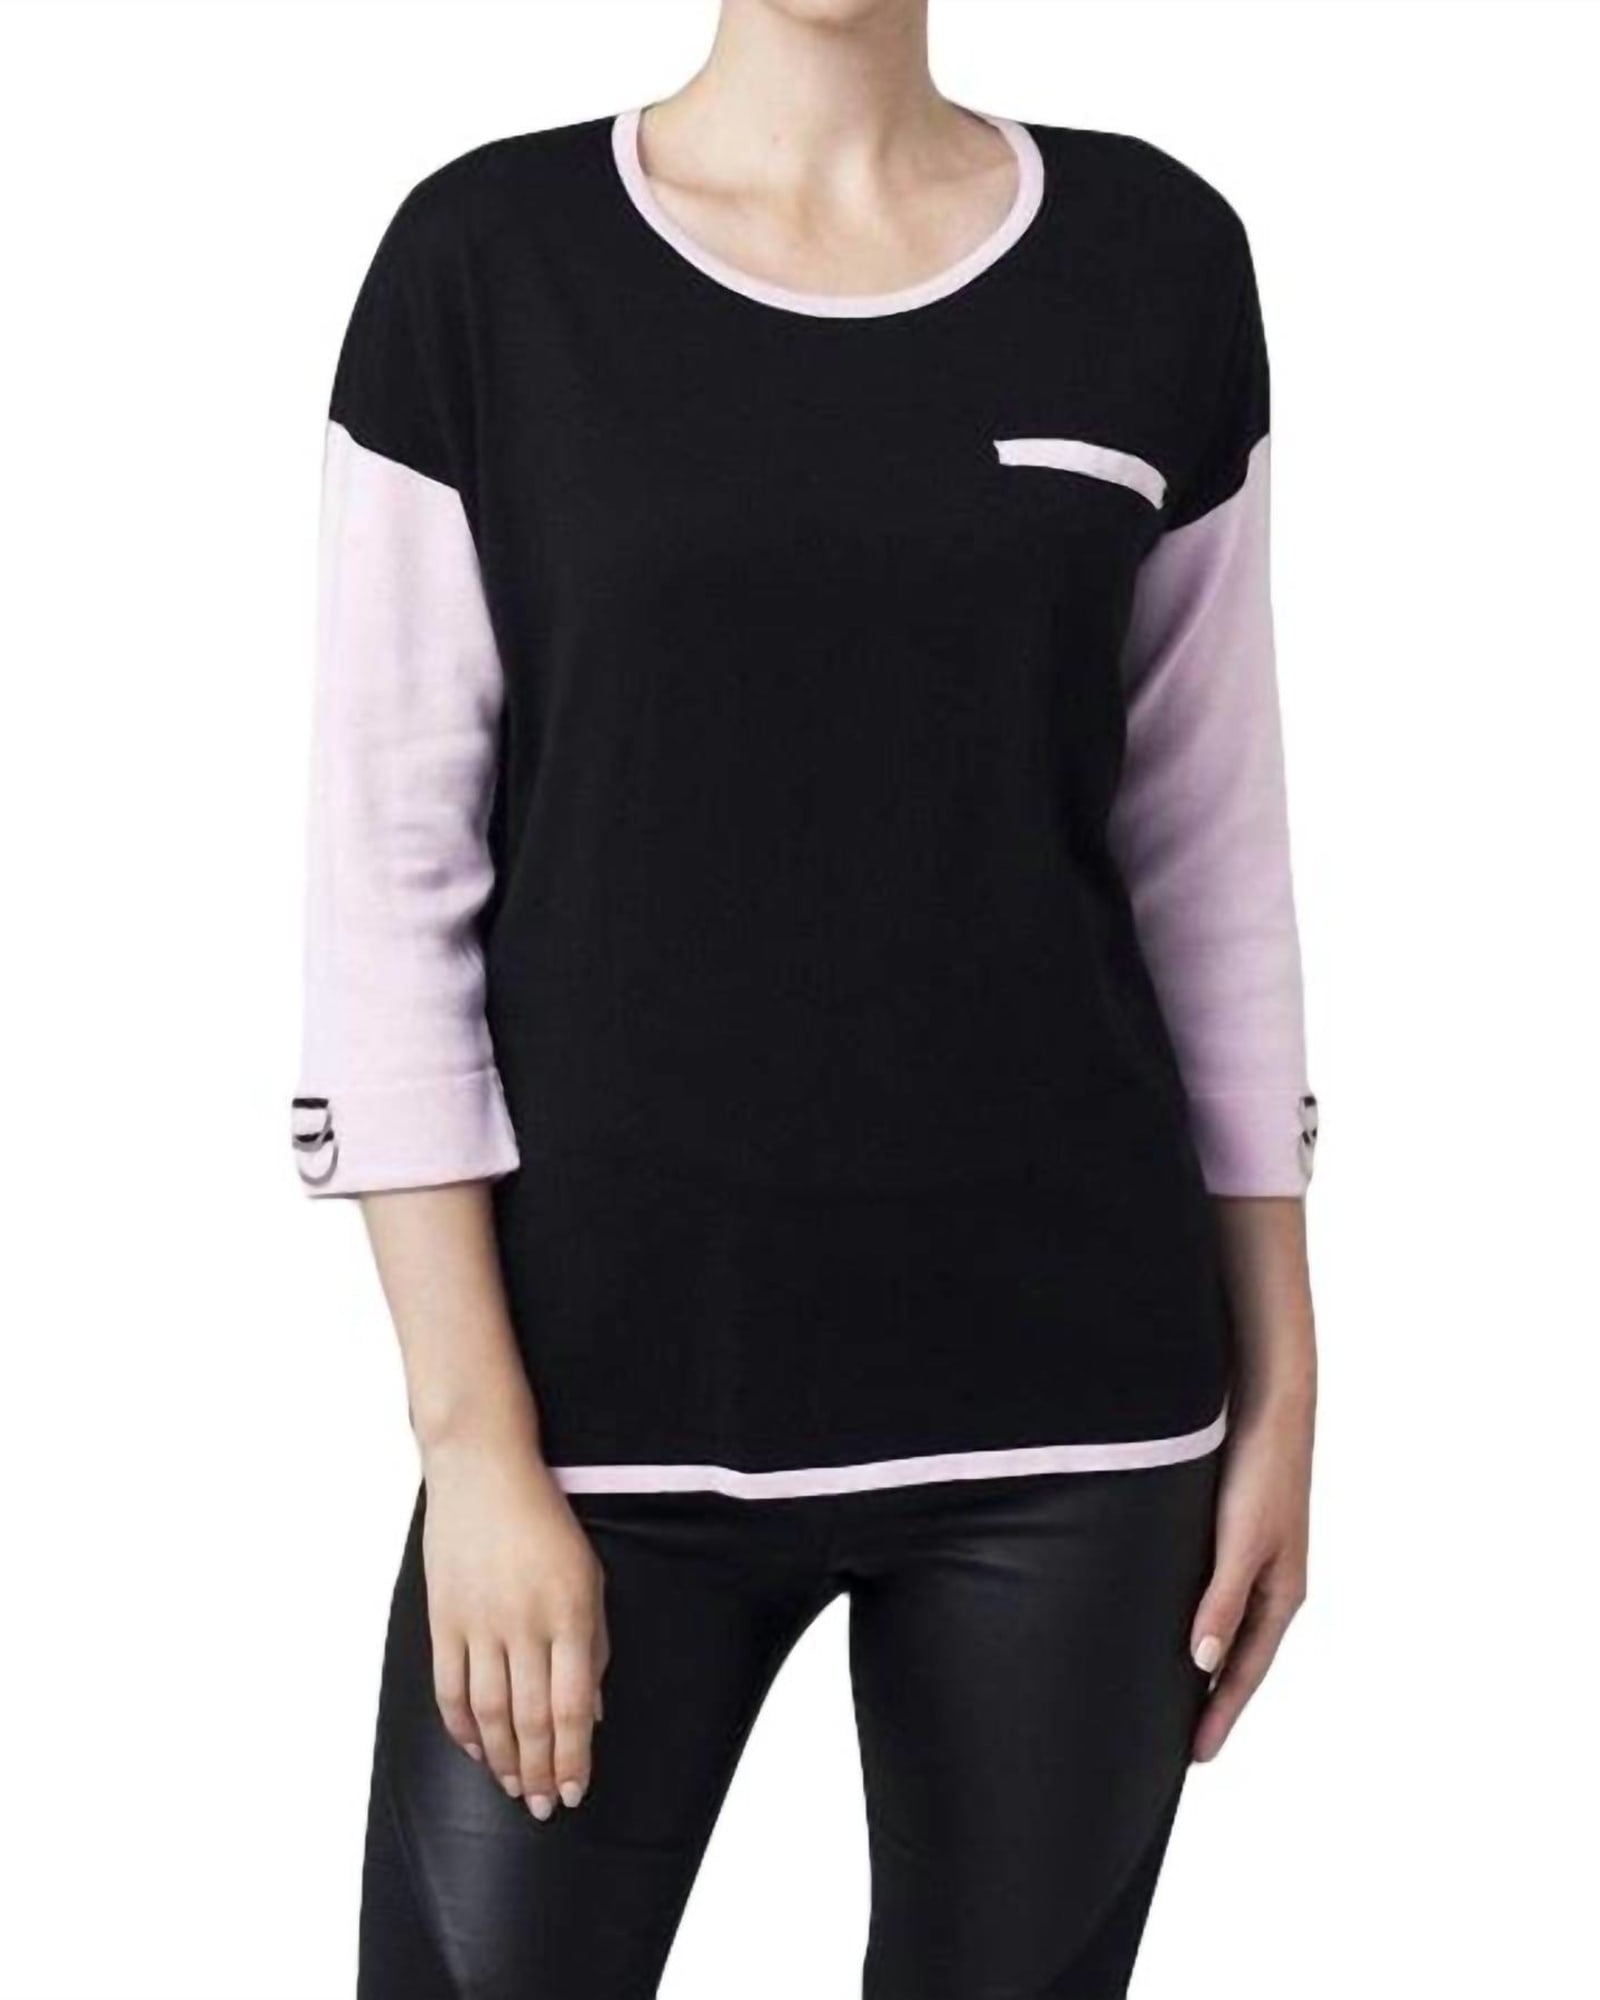 2-Tone Sweater in Blac/Pink | Blac/Pink